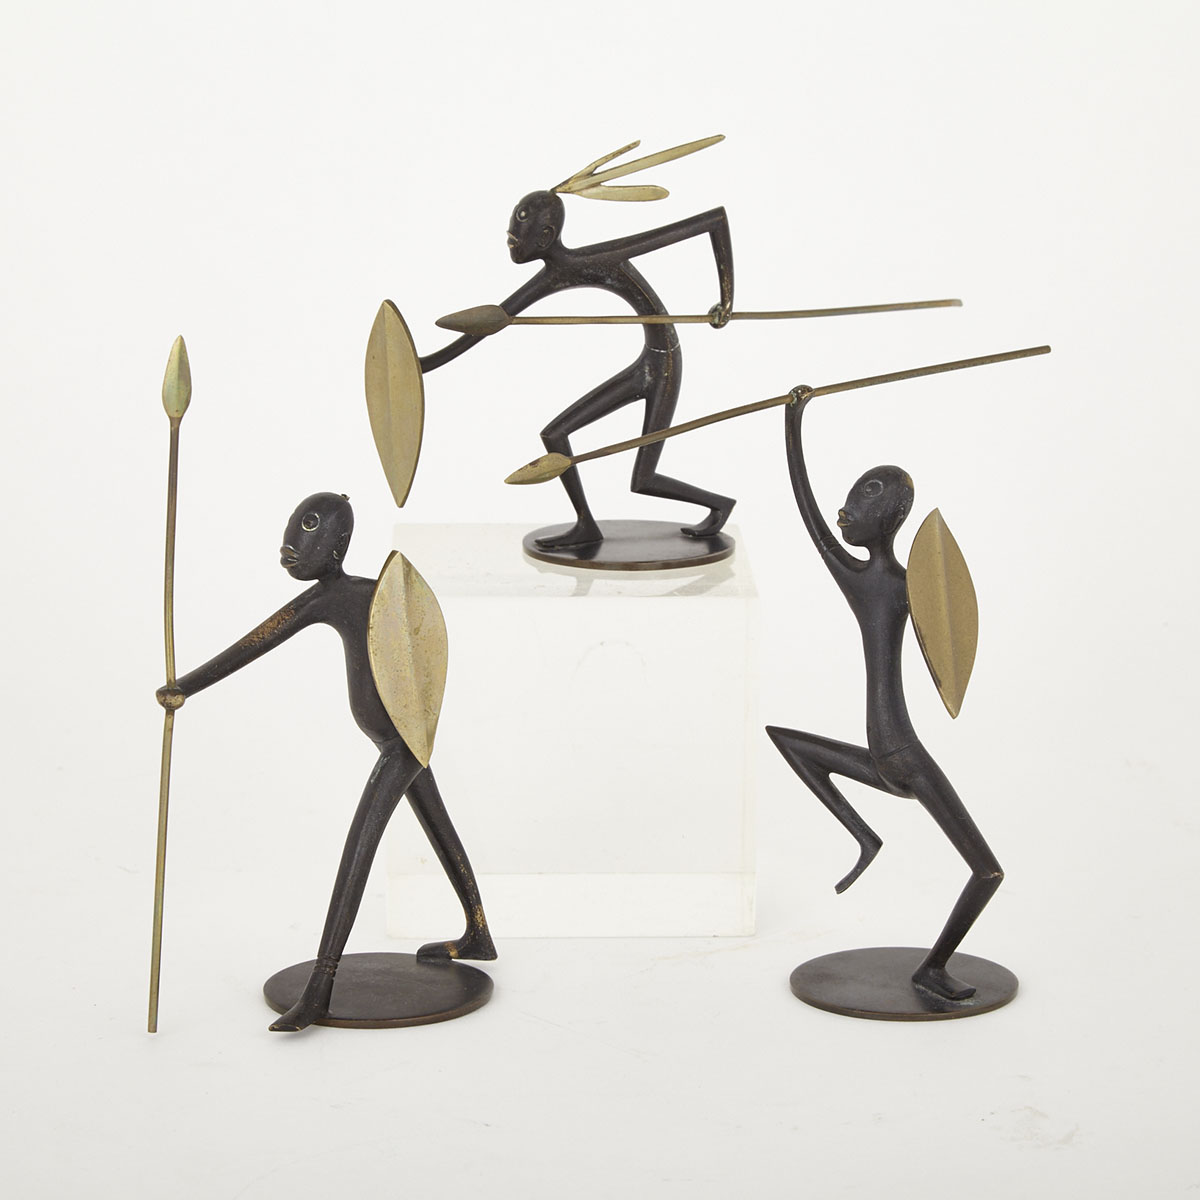 Three Hagenauer Gilt and Patinated Bronze ‘African’ Warrior Figures, mid 20th century